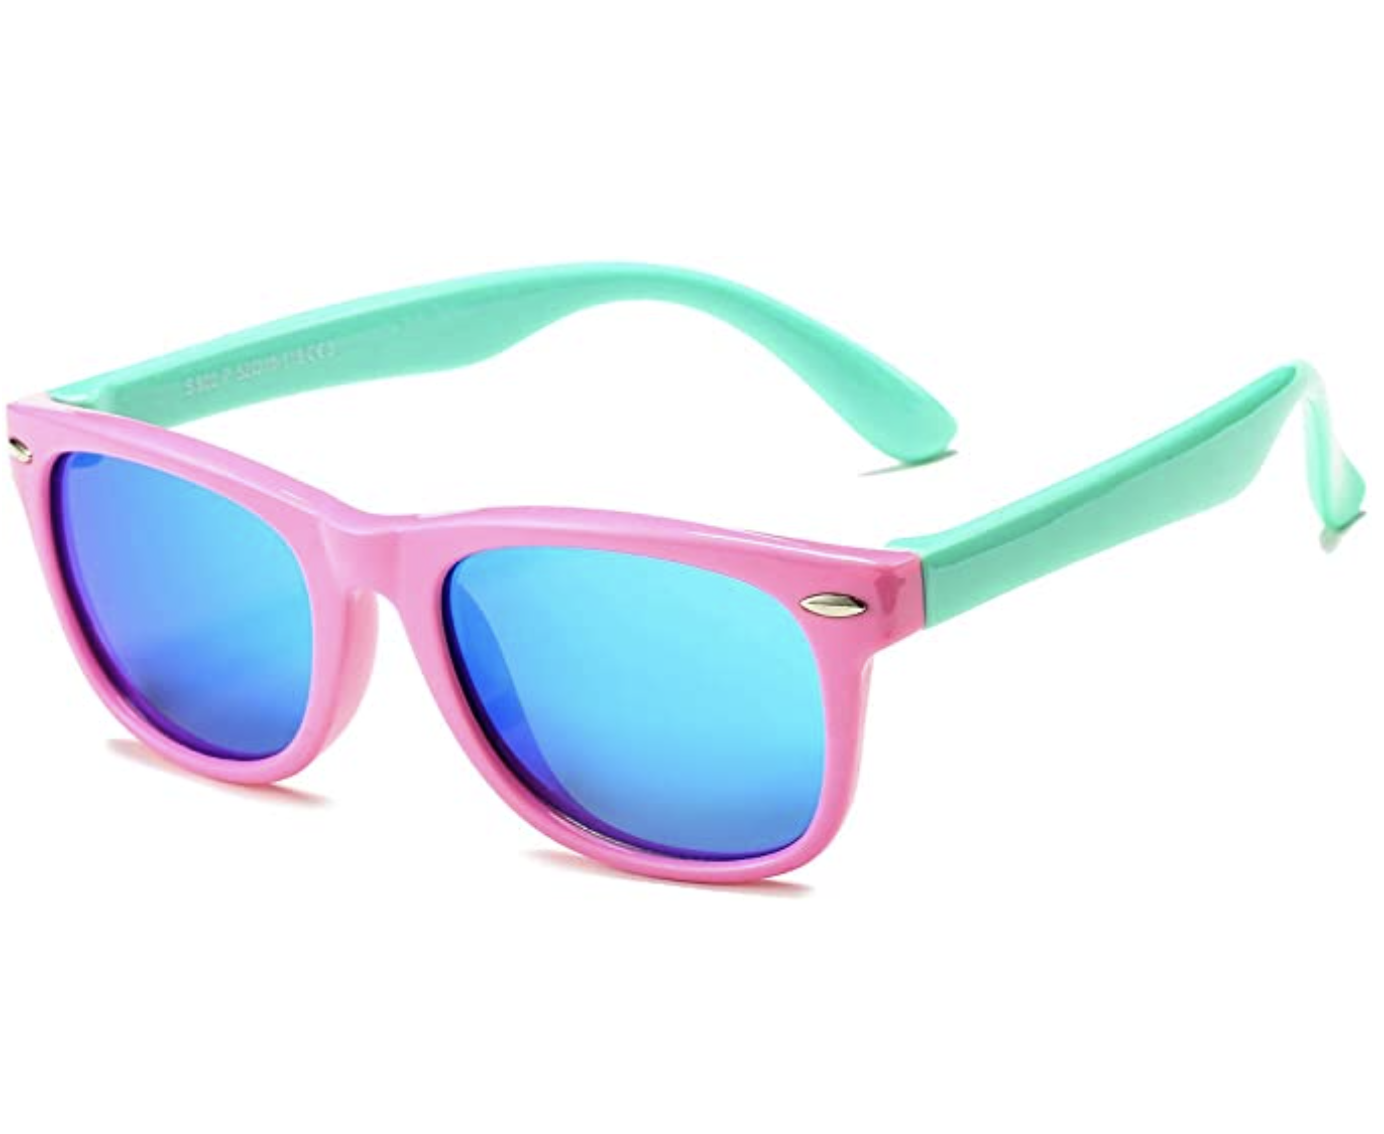 Azorb TPEE Anti-Scratch Flexible Sunglasses For Kids